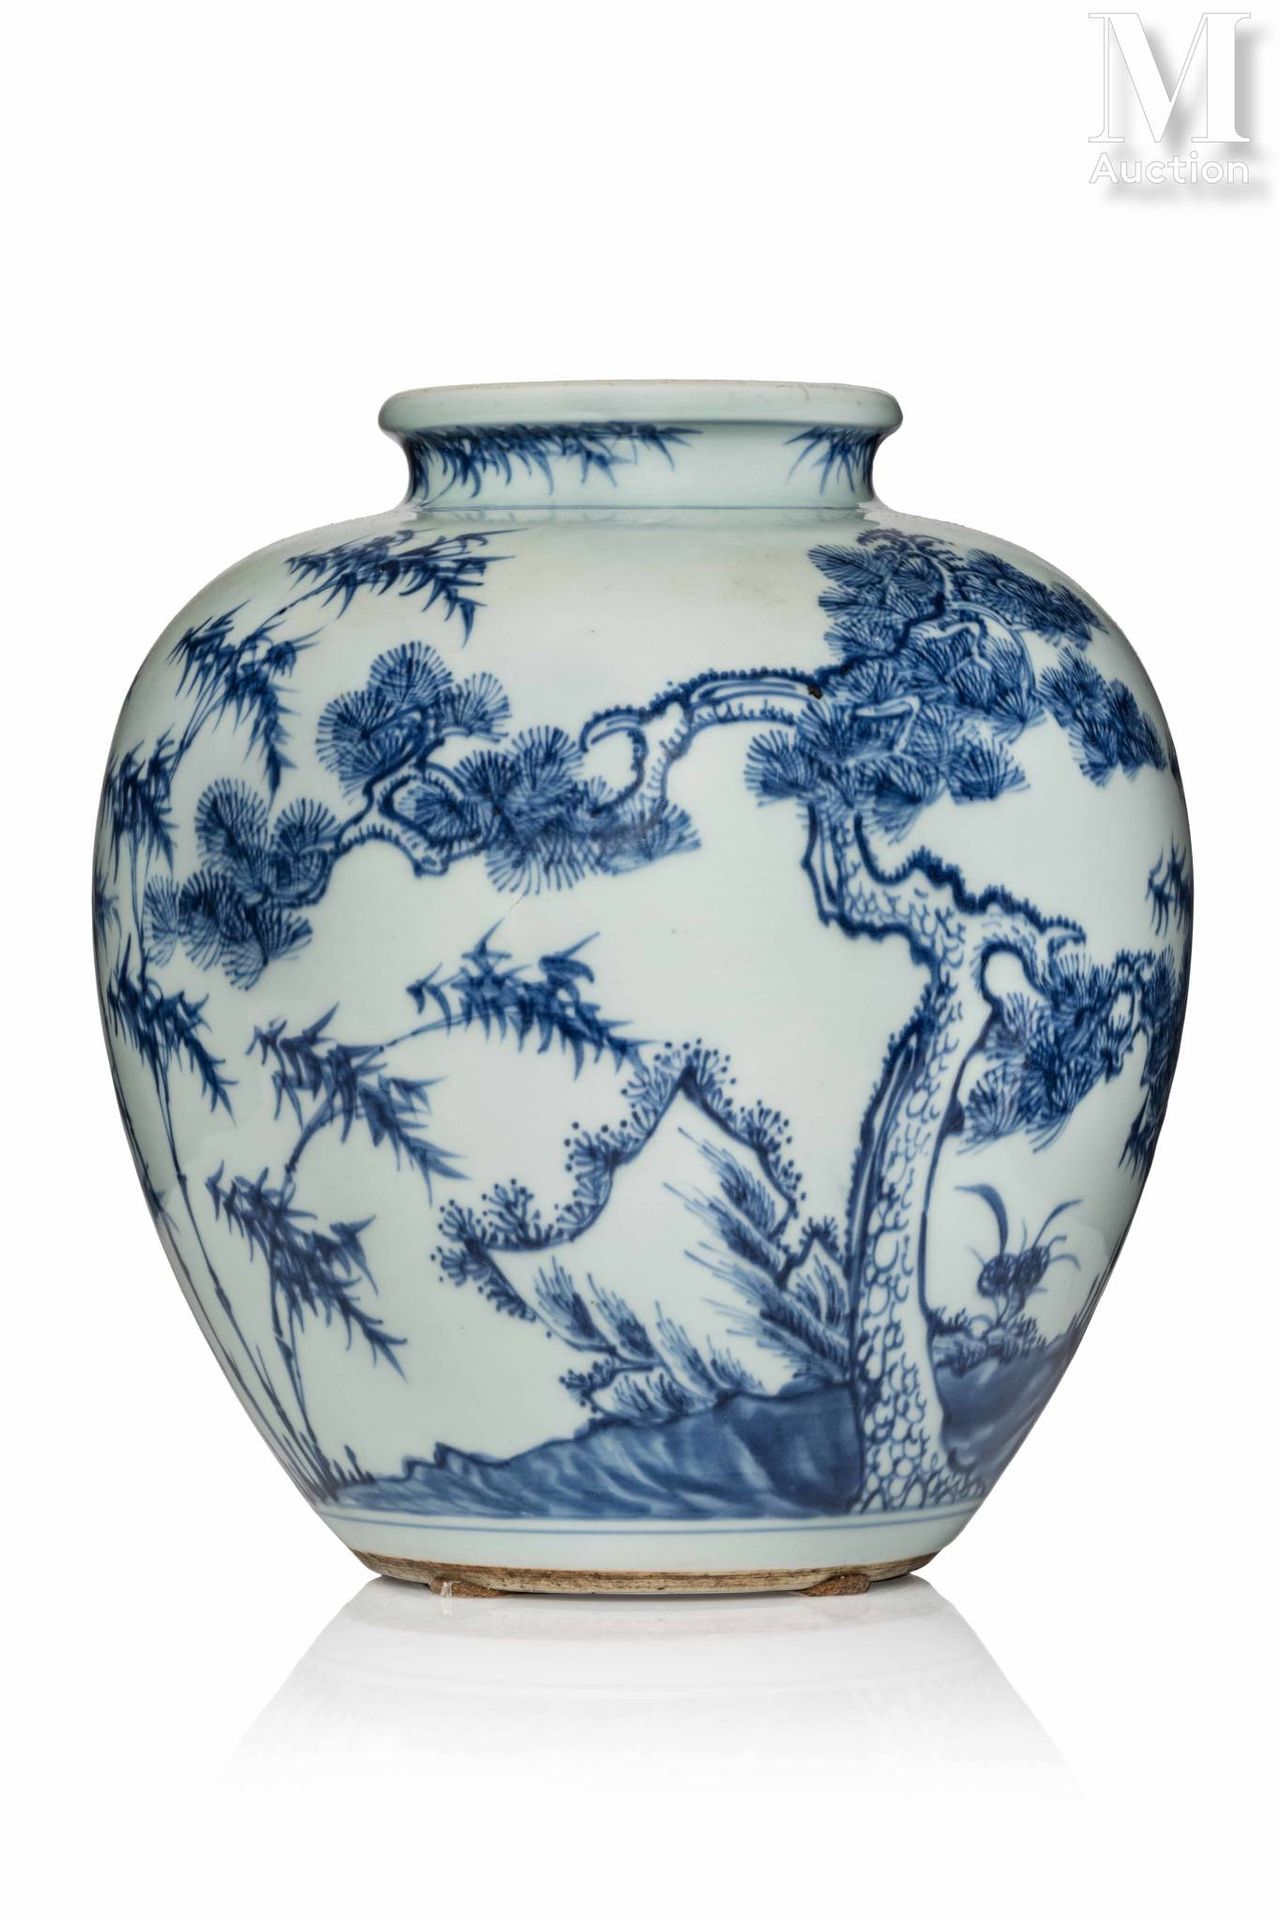 CHINE, XVIIIe-XIXe siècle 瓷器花瓶

卵圆形，以青花装饰冬季三友（松、梅、竹）。底部没有上釉。
高度：22厘米